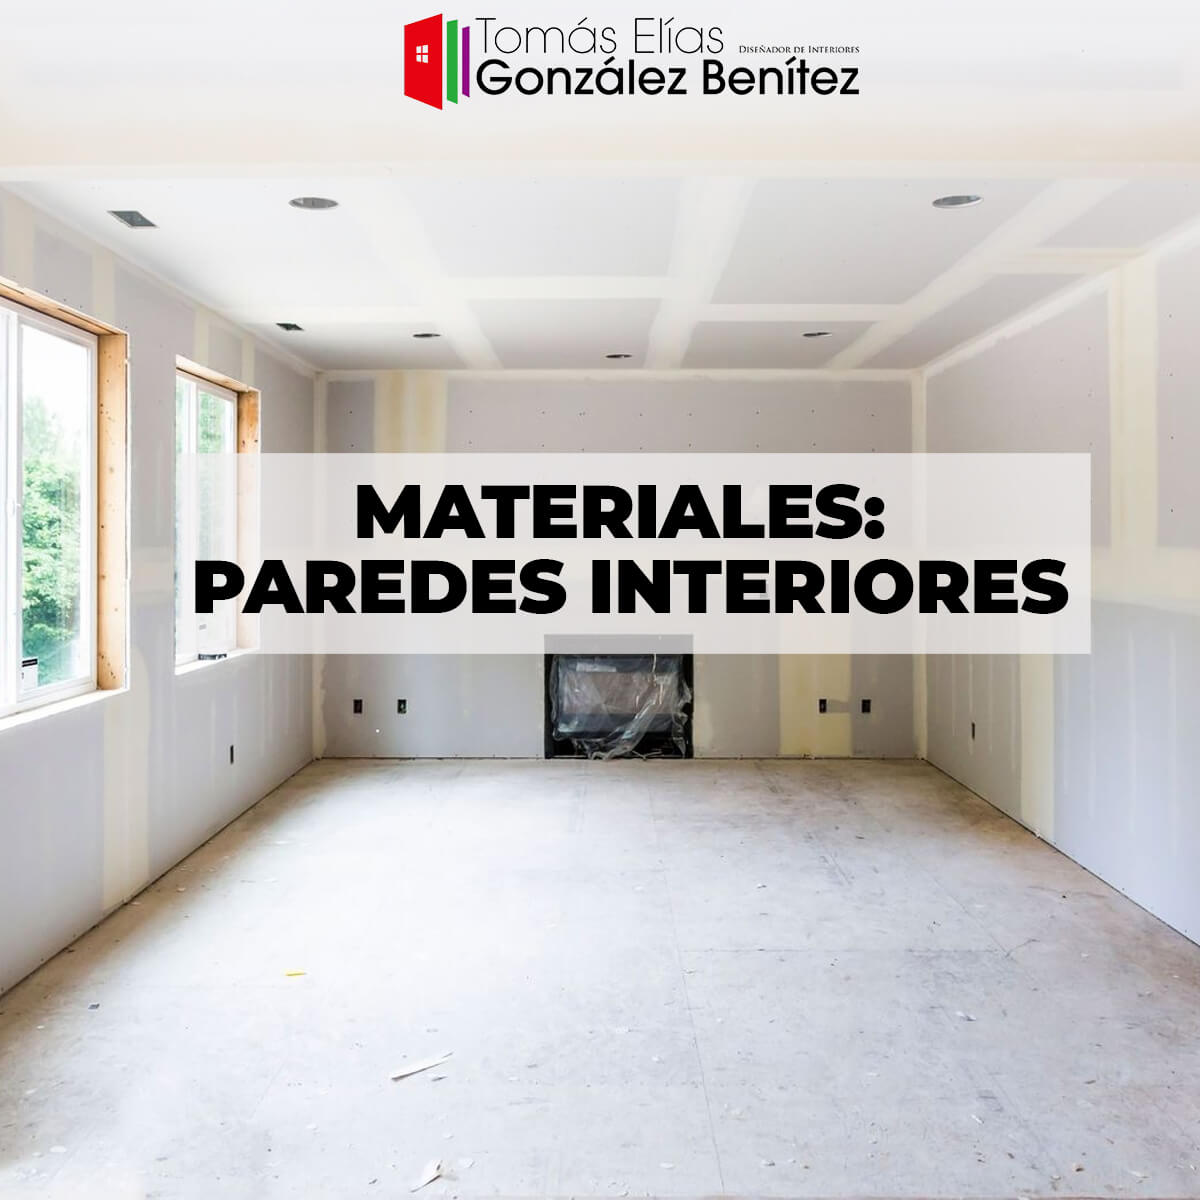 Materiales Paredes Interiores. gonzalezbenitez-tomaselias.com